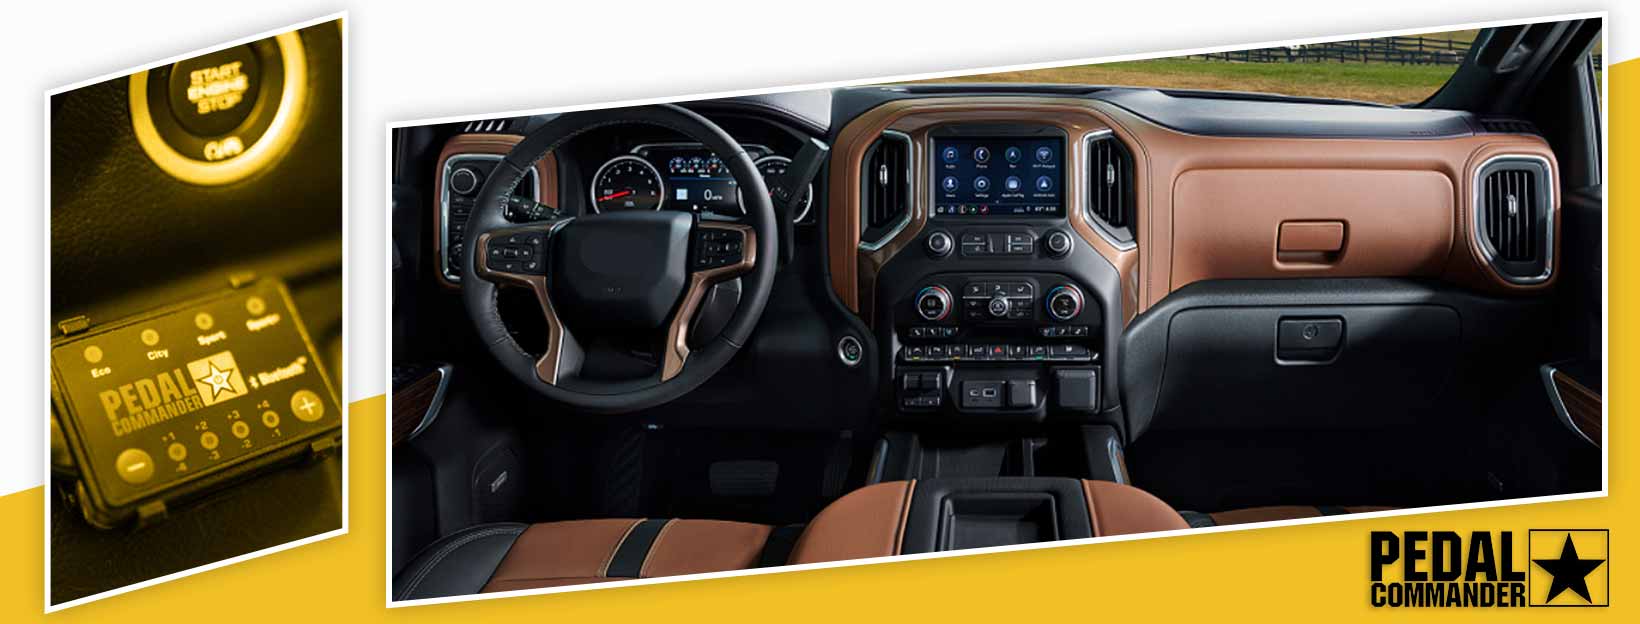 Pedal Commander for Chevrolet Silverado 1500 - interior